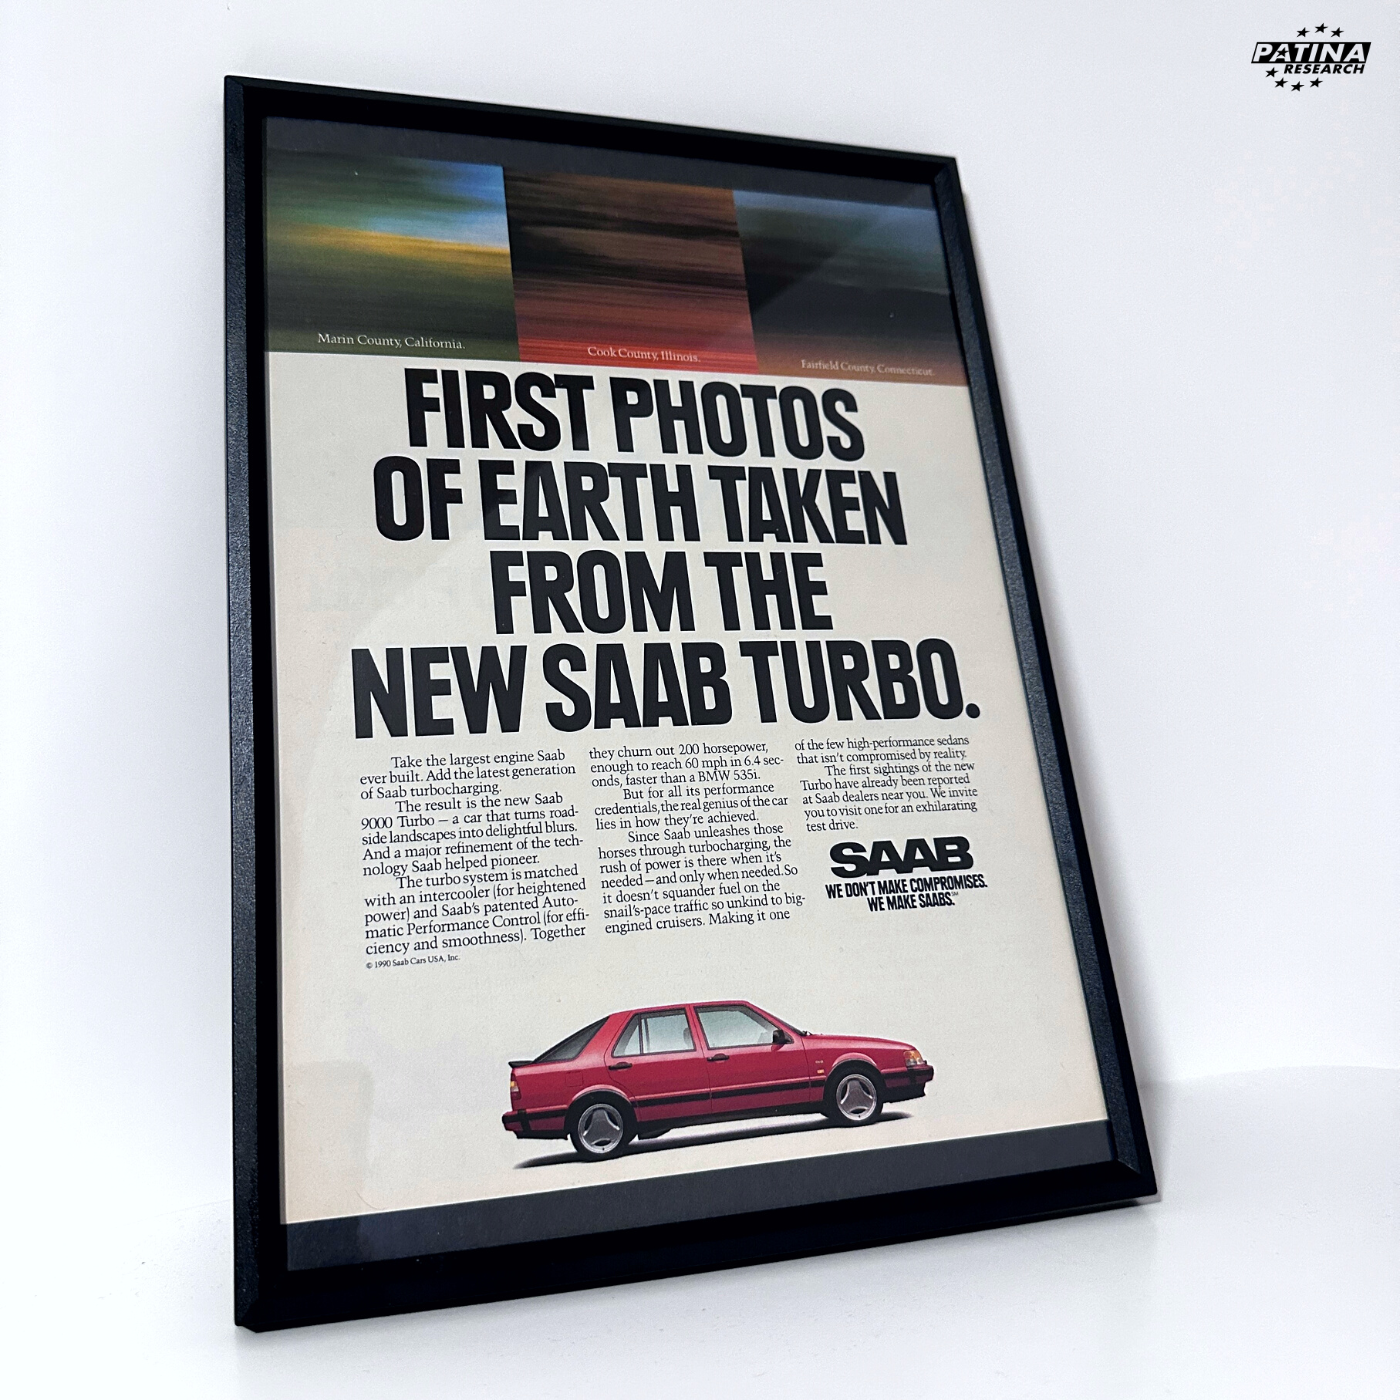 SAAB 9000 Turbo first photos of earth framed ad